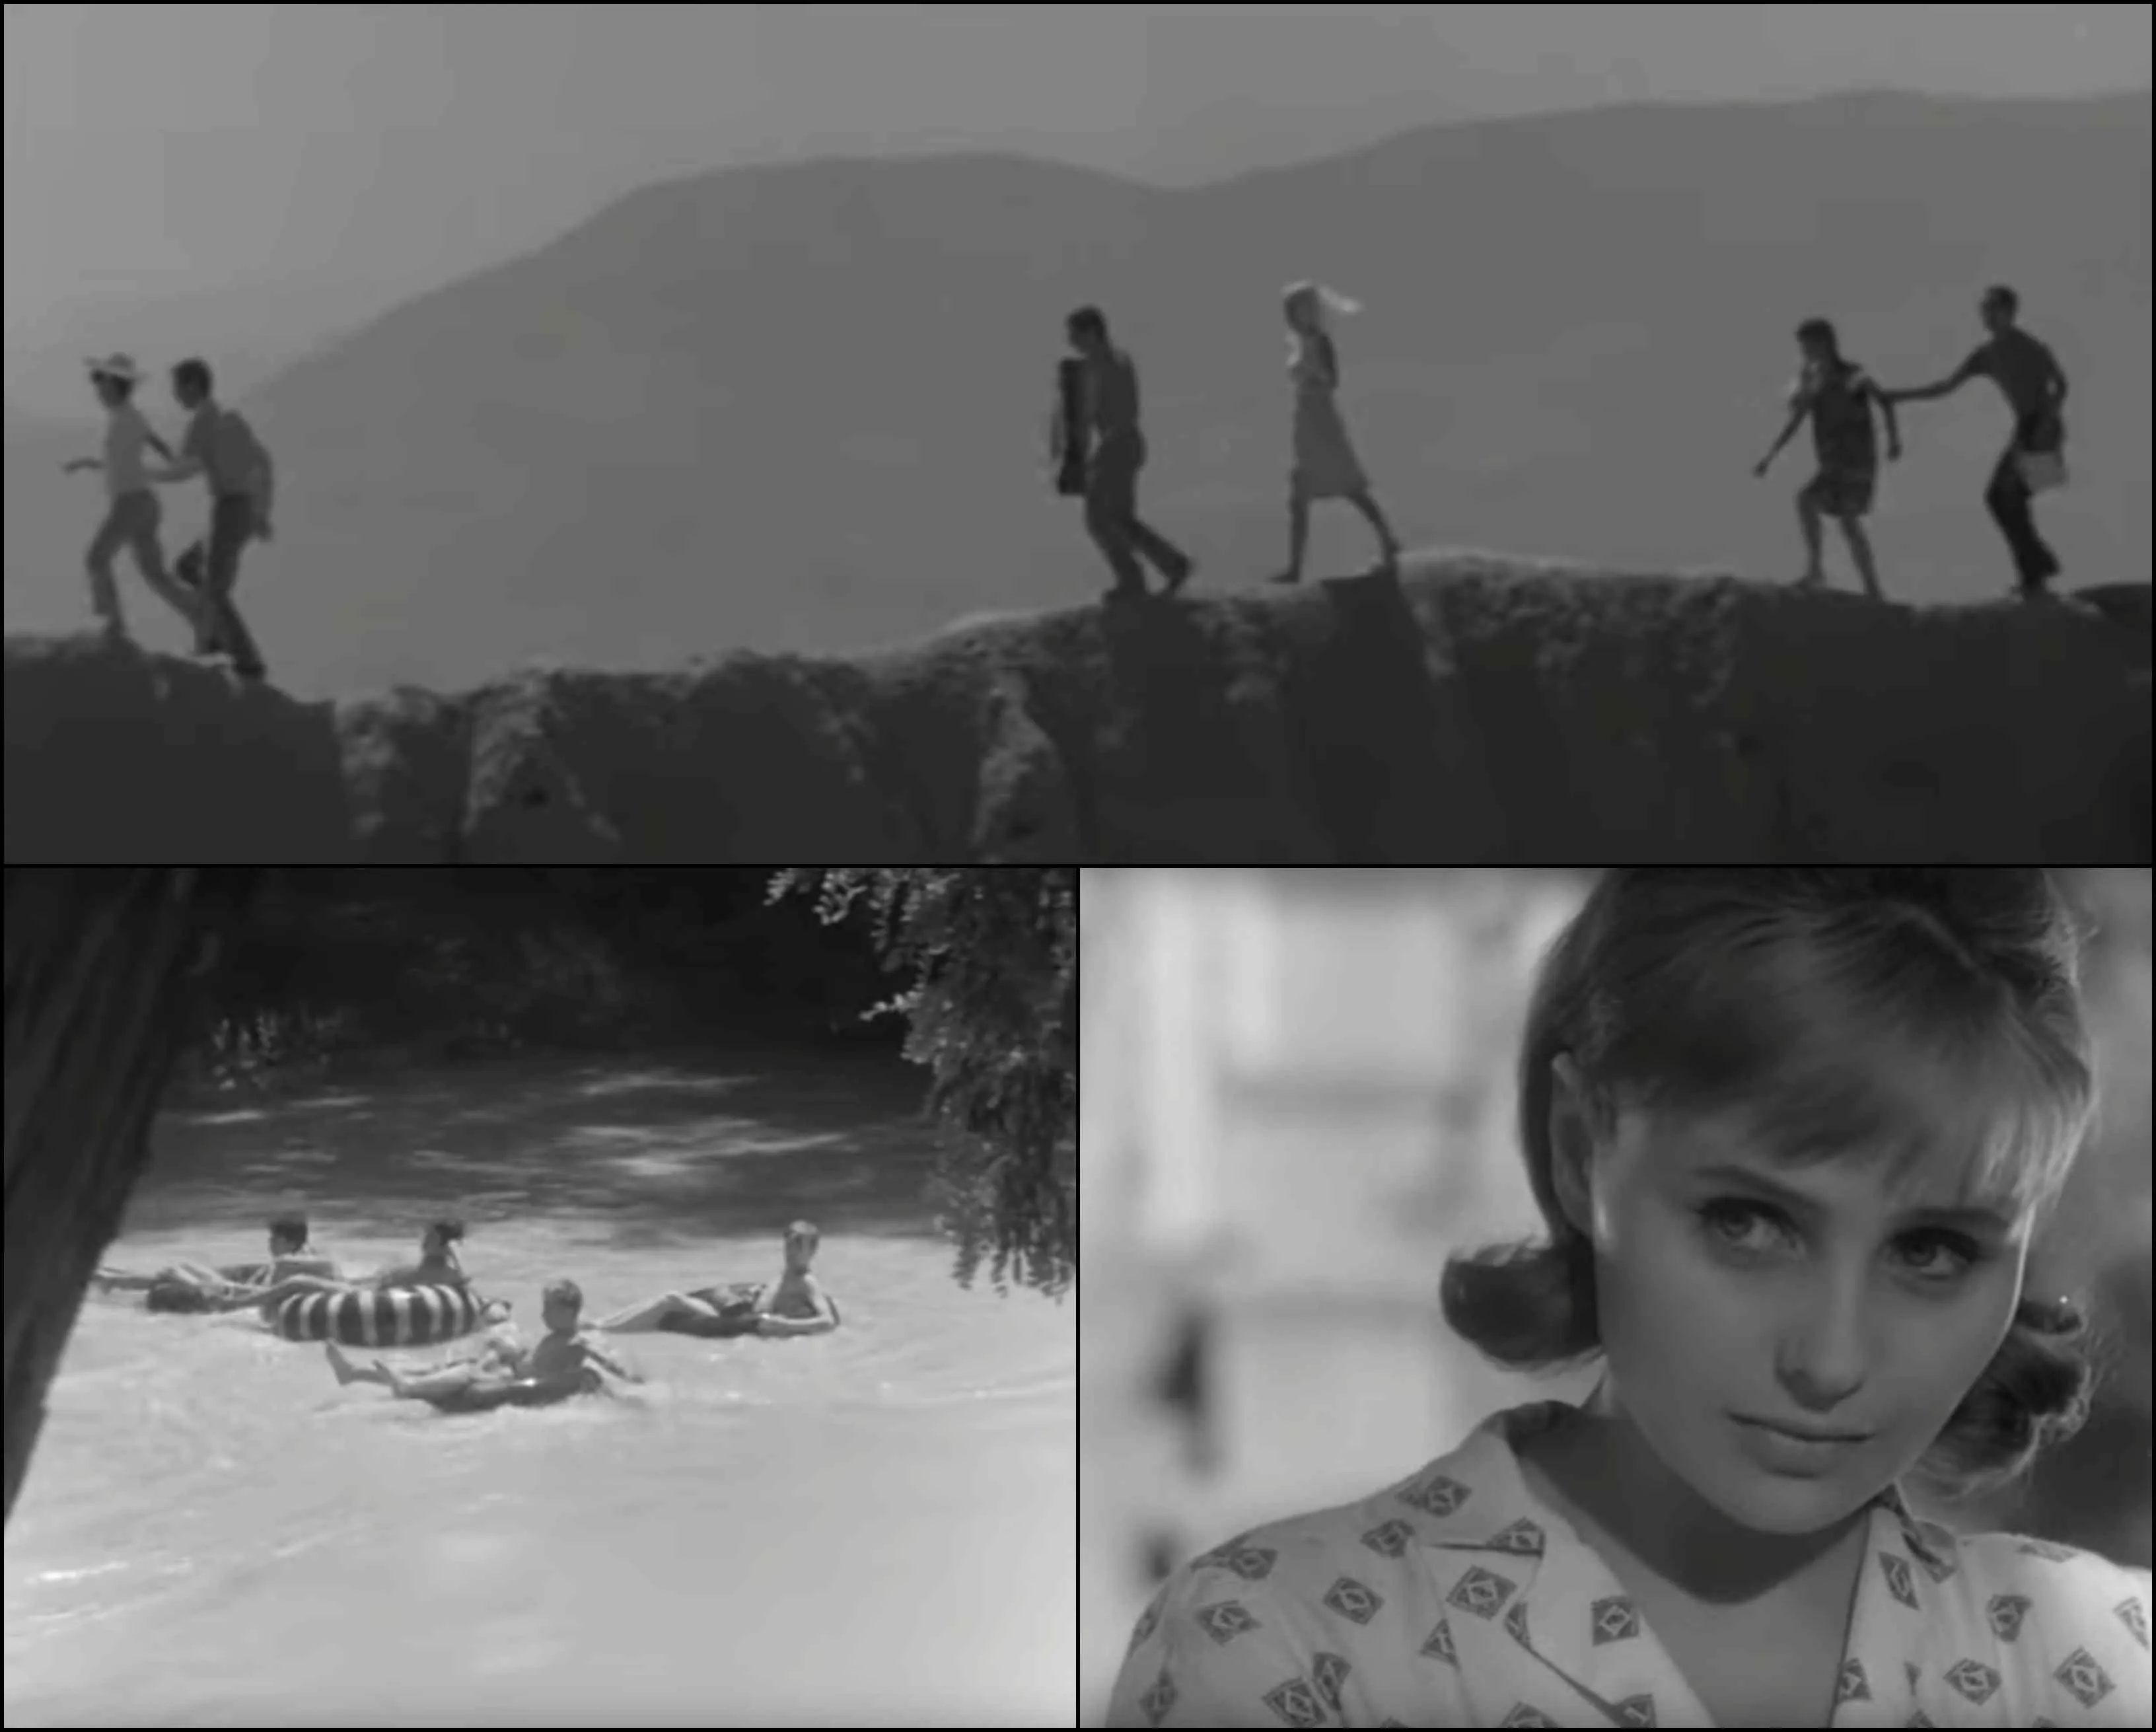 Stilld from the 1967 film Nezhnost.